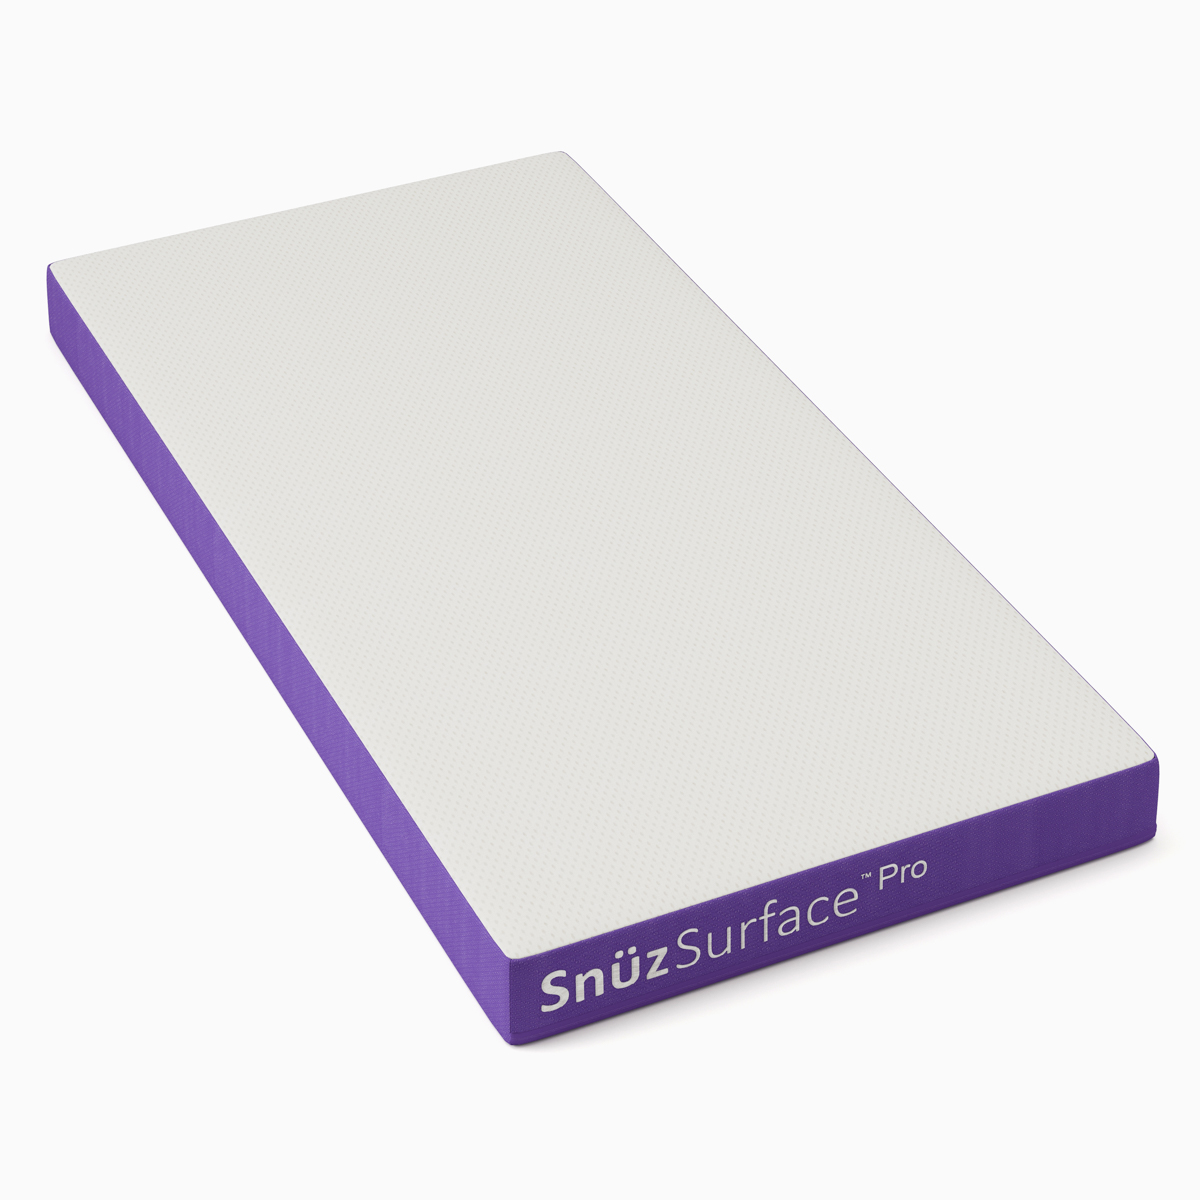 Snüz Surface Pro Matras - Kot (68x117 cm.)